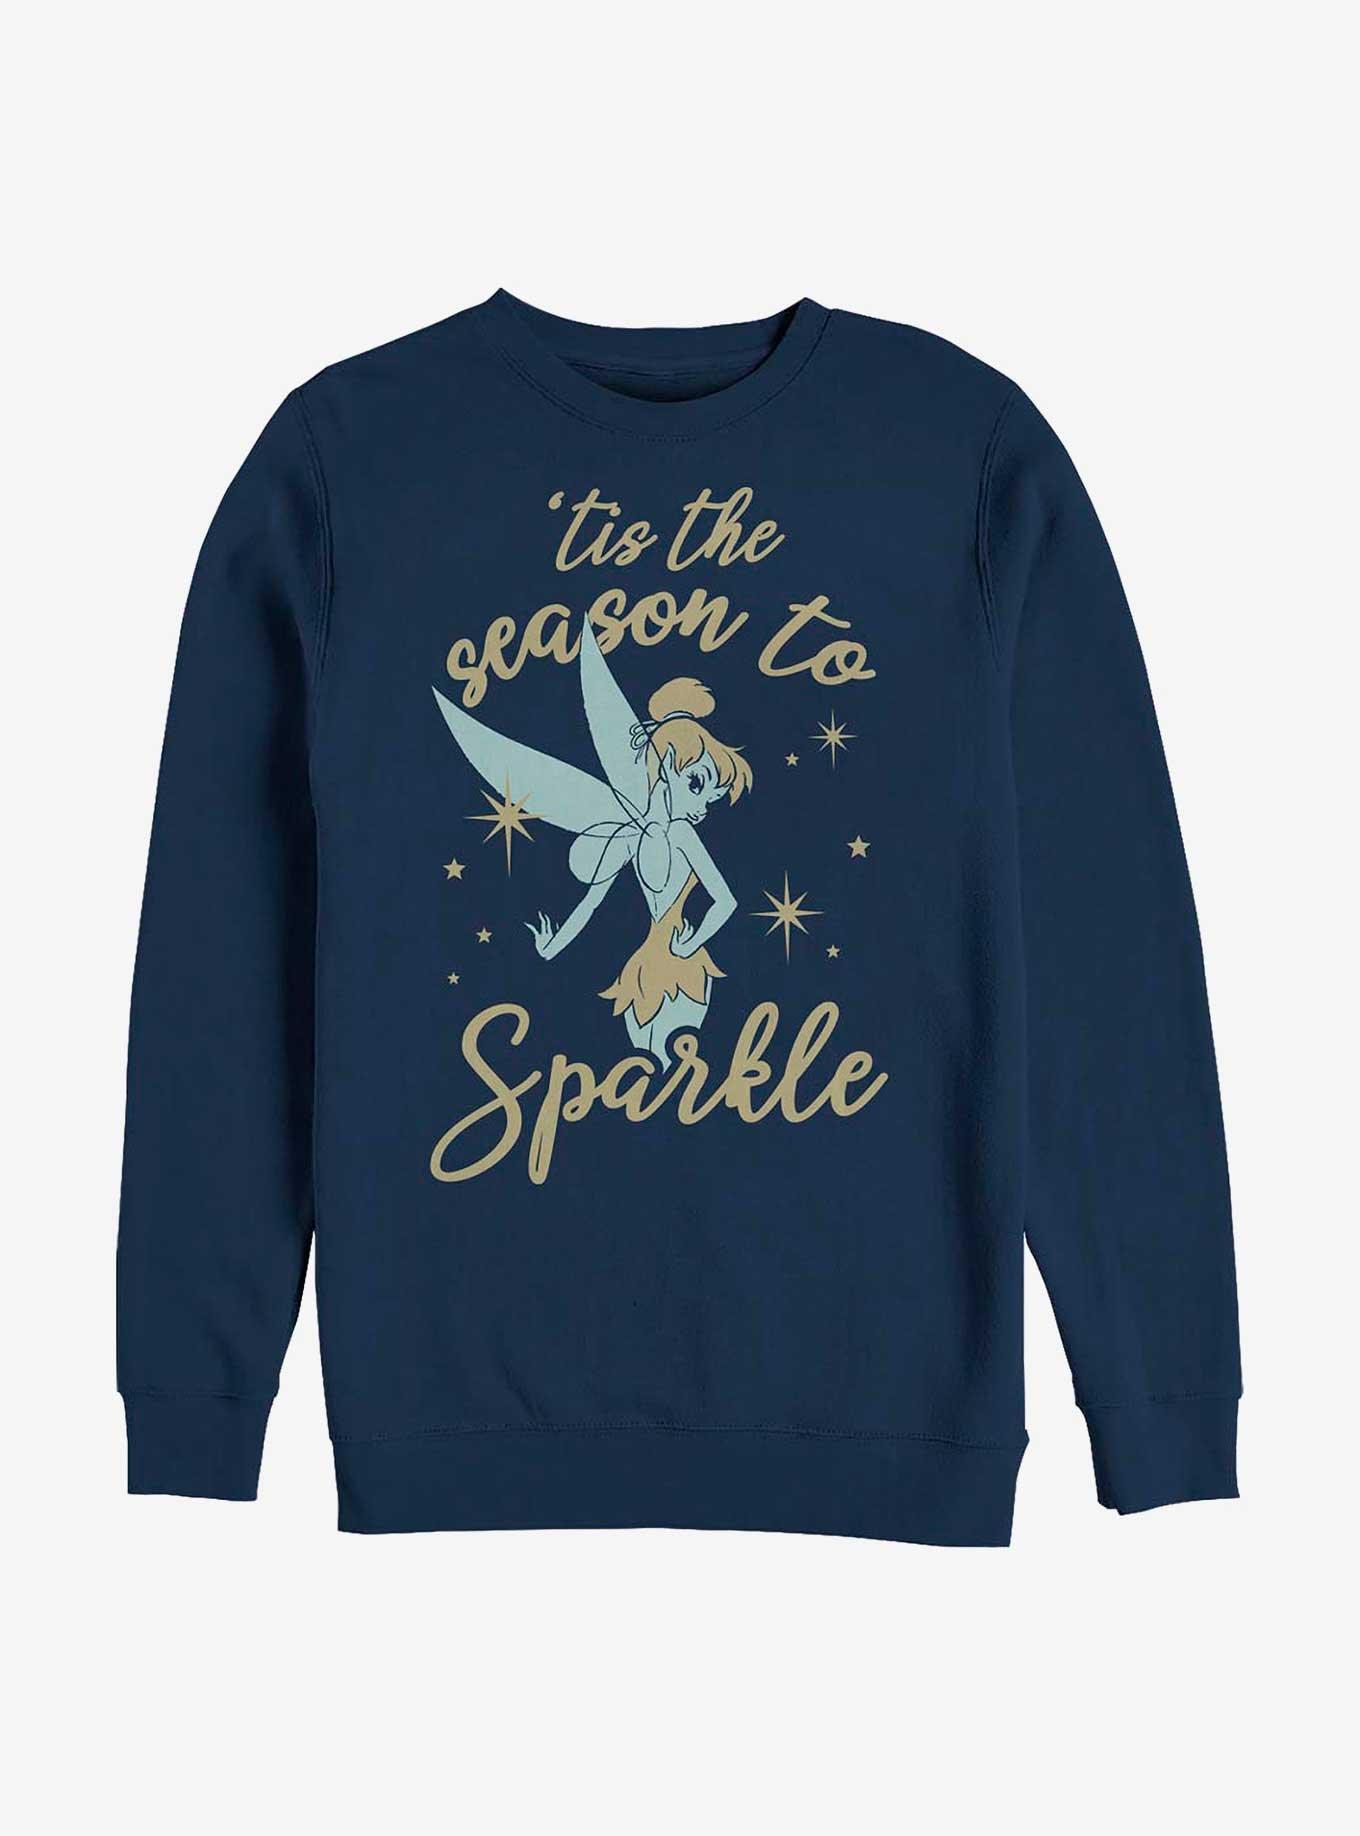 Disney Tinkerbell Sparkle Season Sweatshirt, NAVY, hi-res